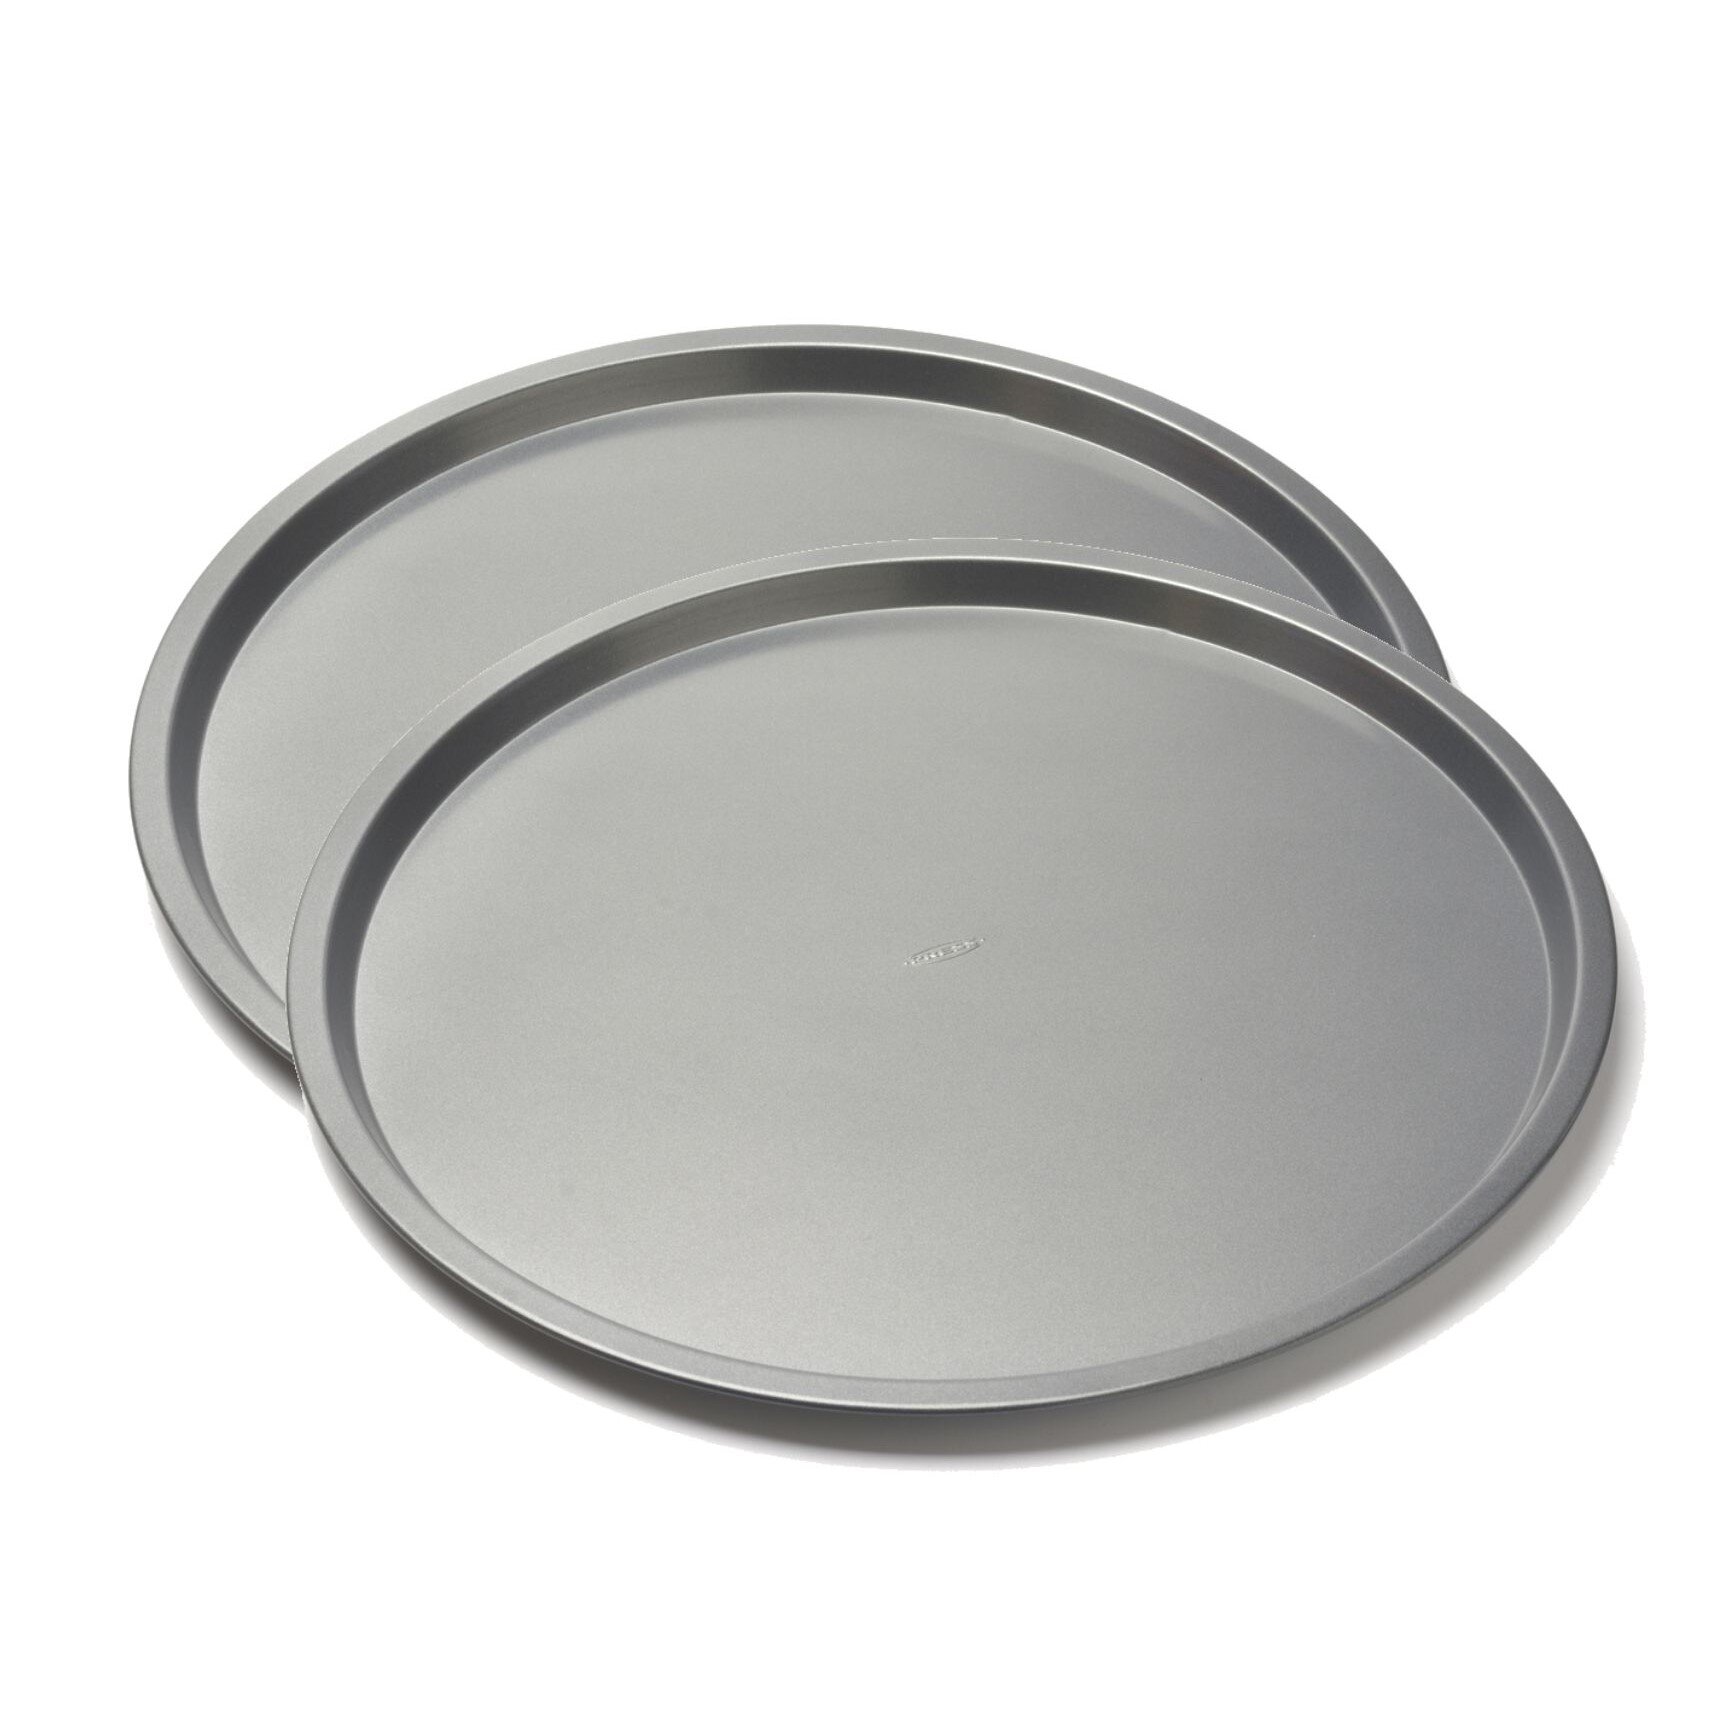 Nordic Ware 12.5 in Round Brown Nonstick Aluminized Steel Pizza Pan